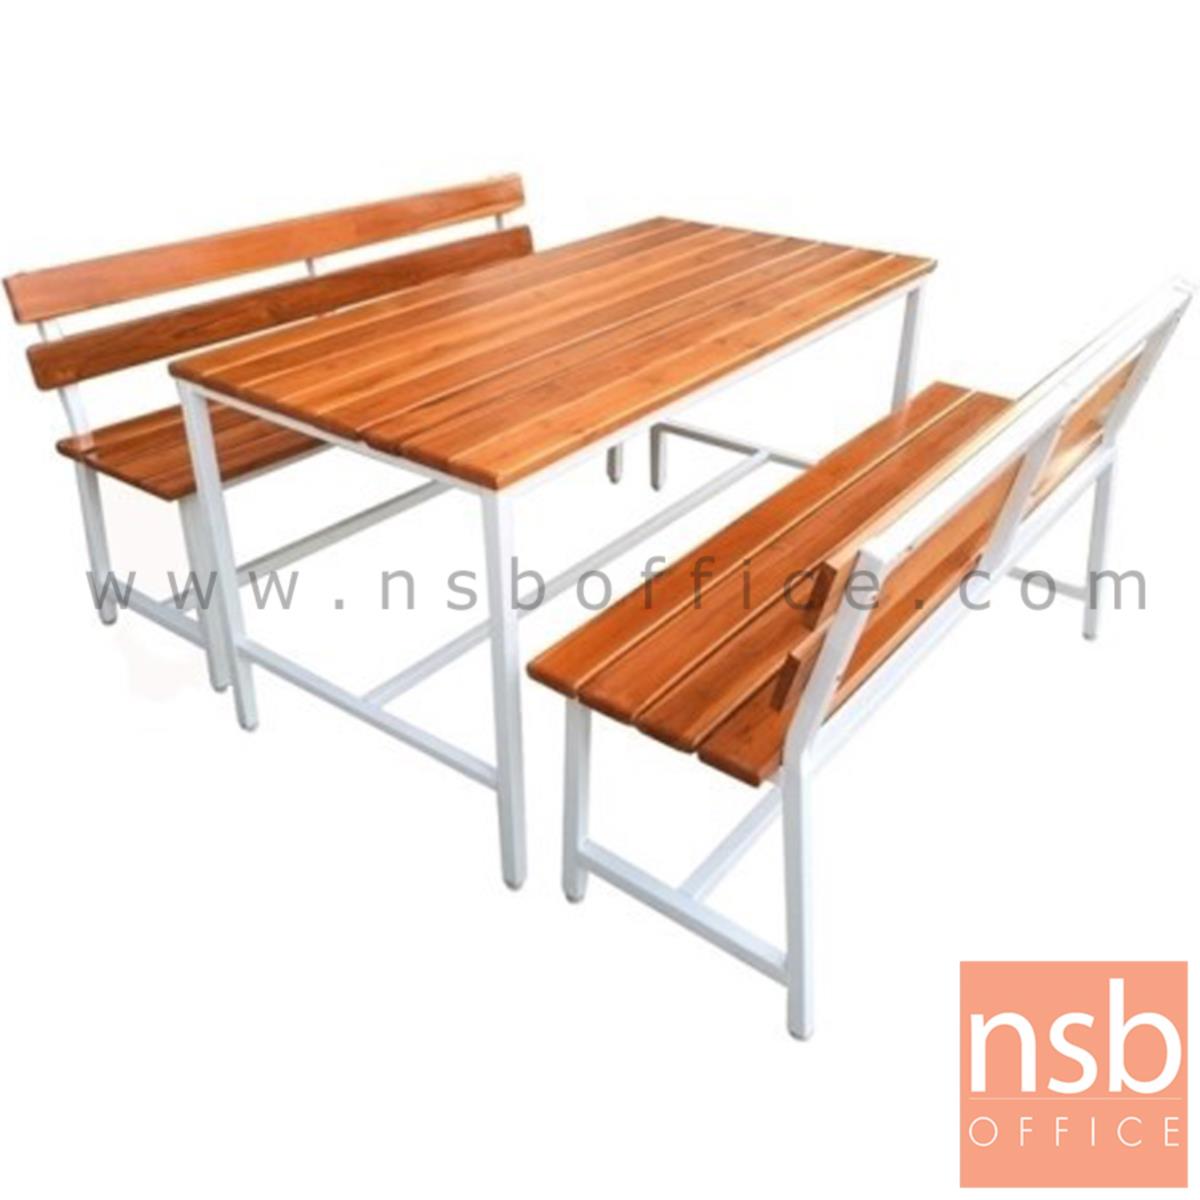 A17A084:โต๊ะโรงอาหารไม้สักตีระแนงชิด รุ่น TENNESSEE (เทนเนสซี) ขนาด 150W cm. ขาเหล็ก